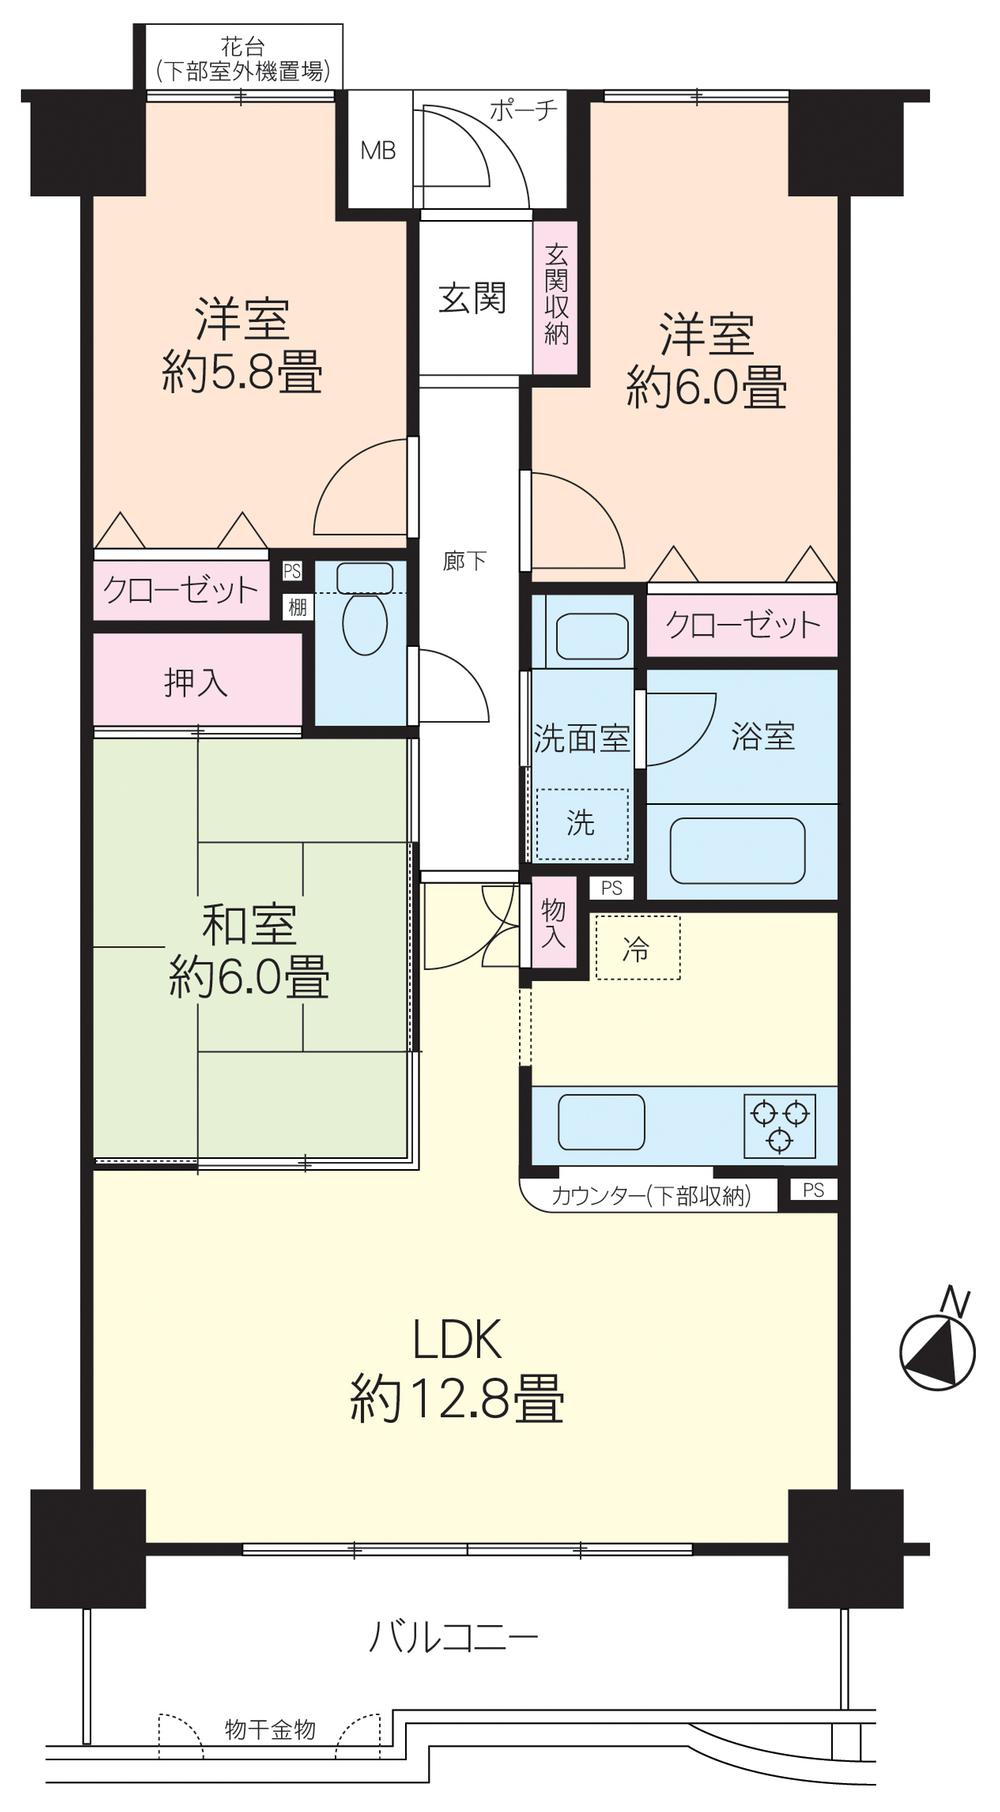 Floor plan. 3LDK, Price 17.8 million yen, Occupied area 71.37 sq m , Balcony area 10.35 sq m